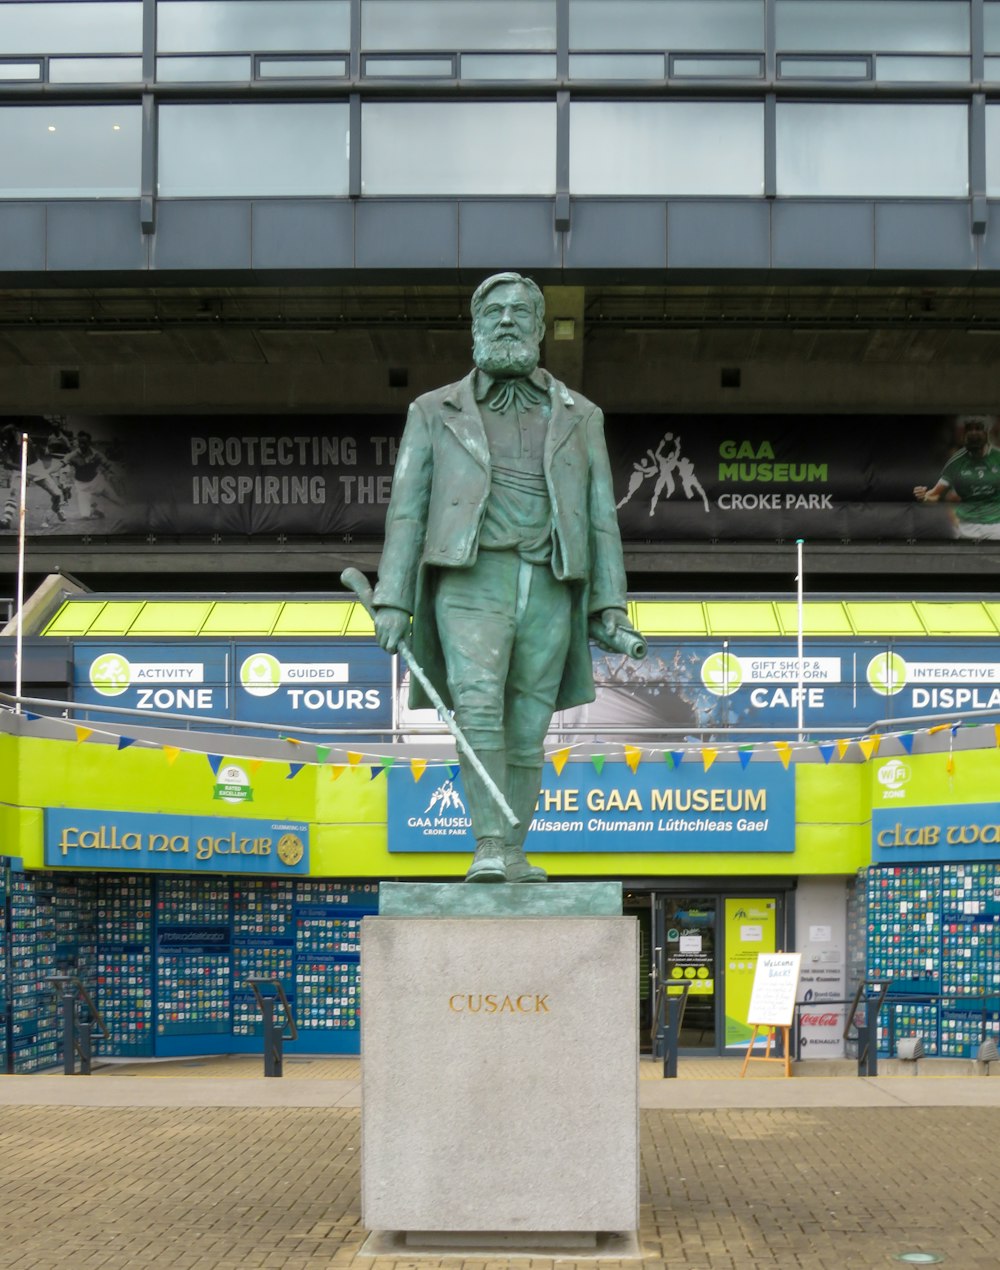 man in green coat statue